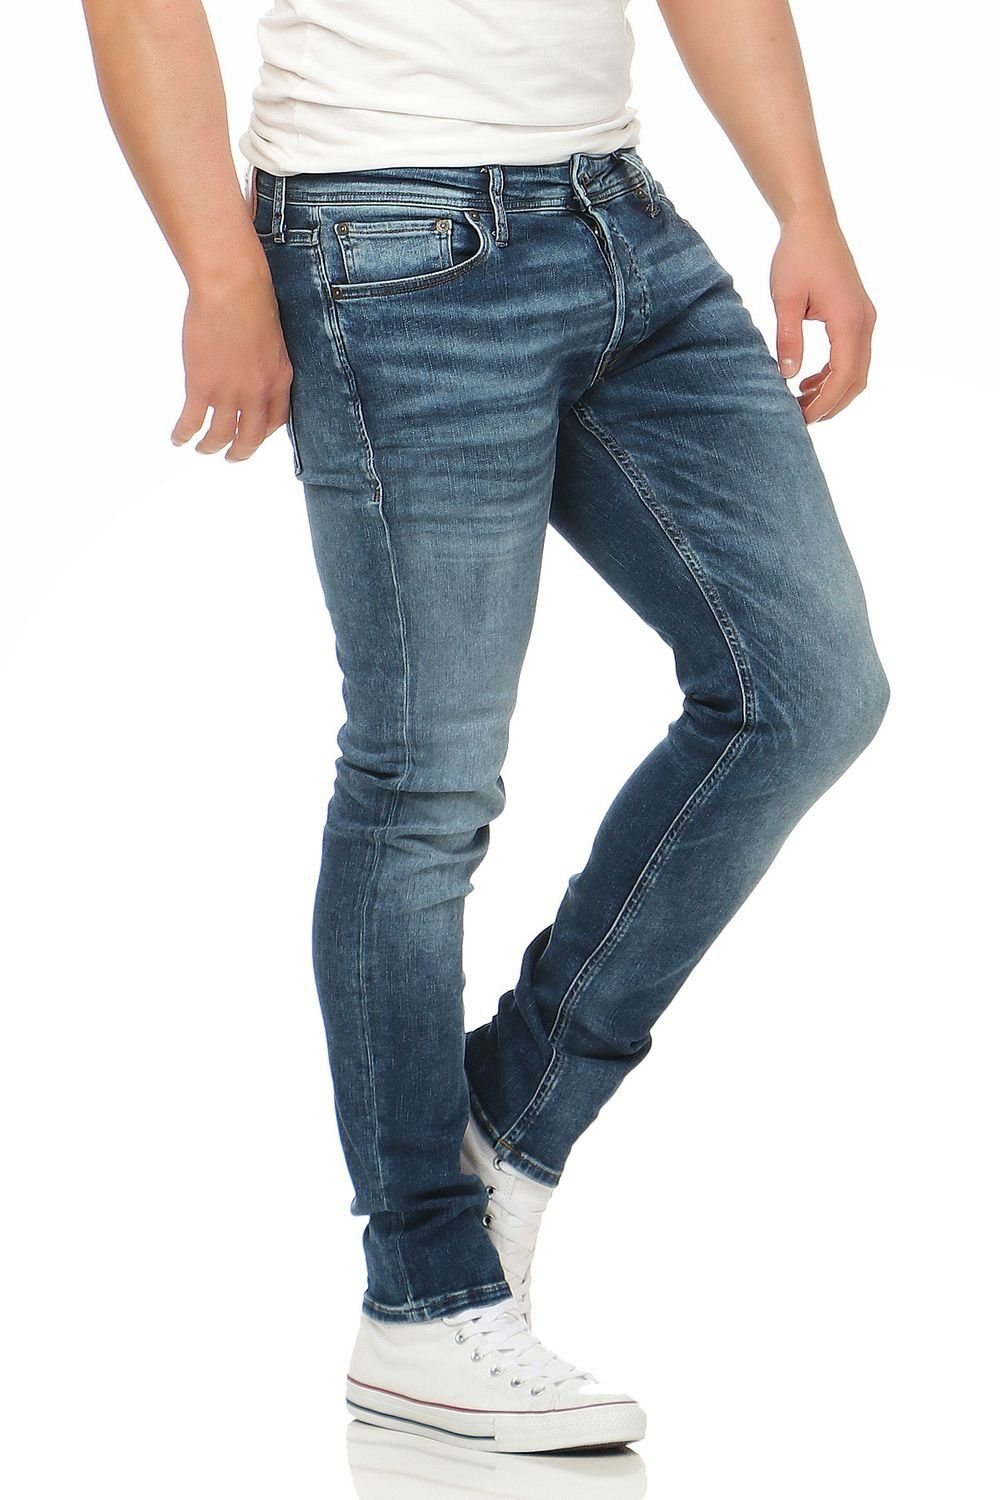 Glenn JOS107 Slim Fit Jones & Jeans Herren Slim-fit-Jeans & Jones Original Jack Jack